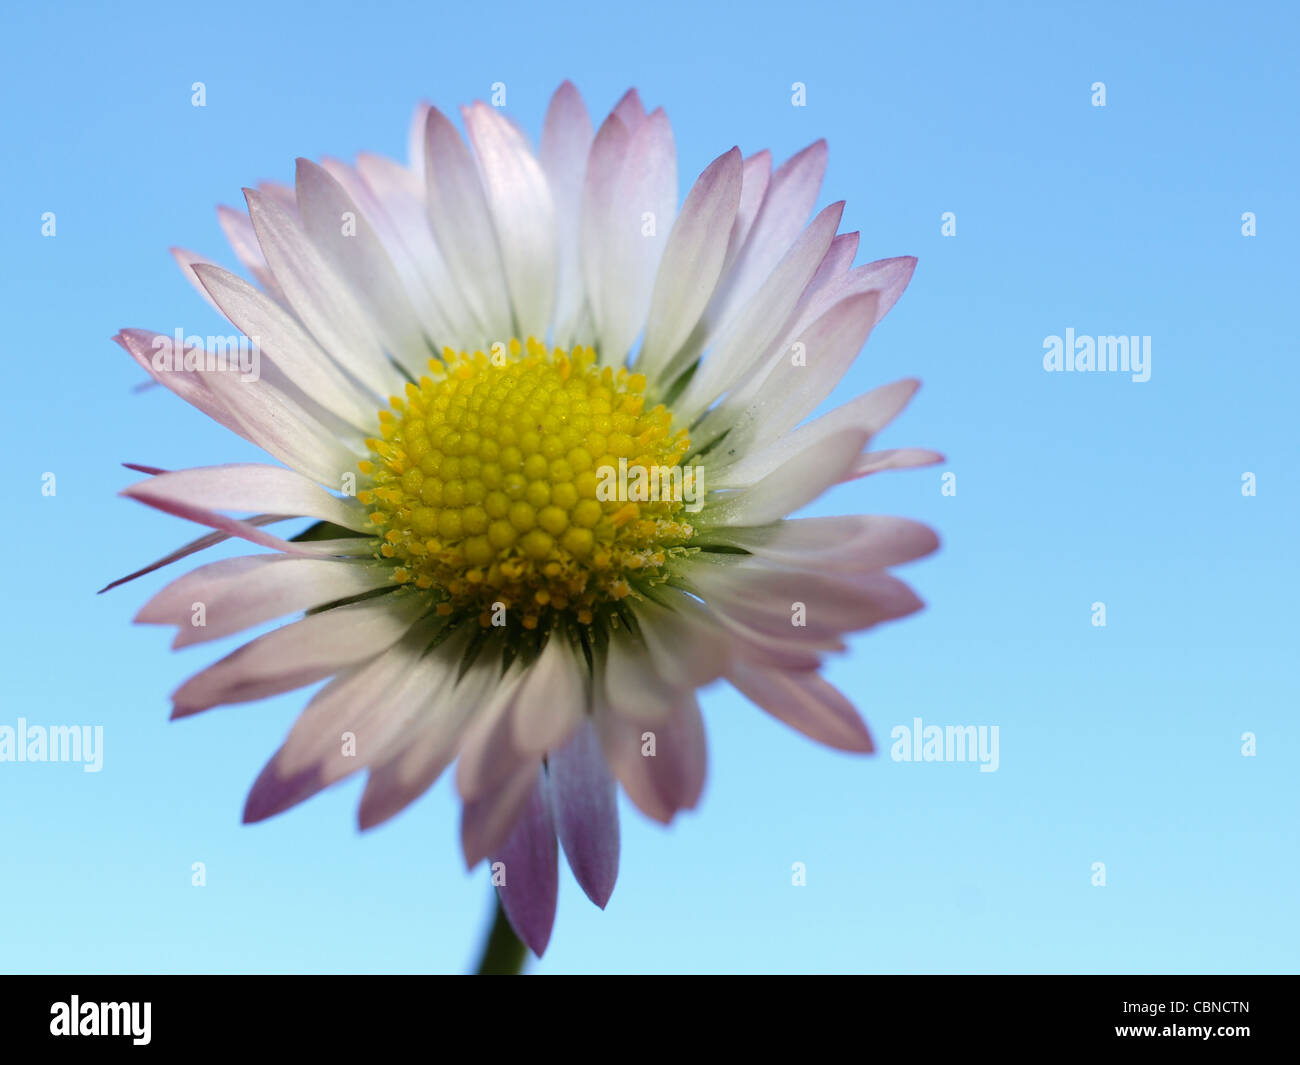 Daisy, Common Daisy, Lawn Daisy, English Daisy / Bellis perennis / Gänseblümchen Stock Photo